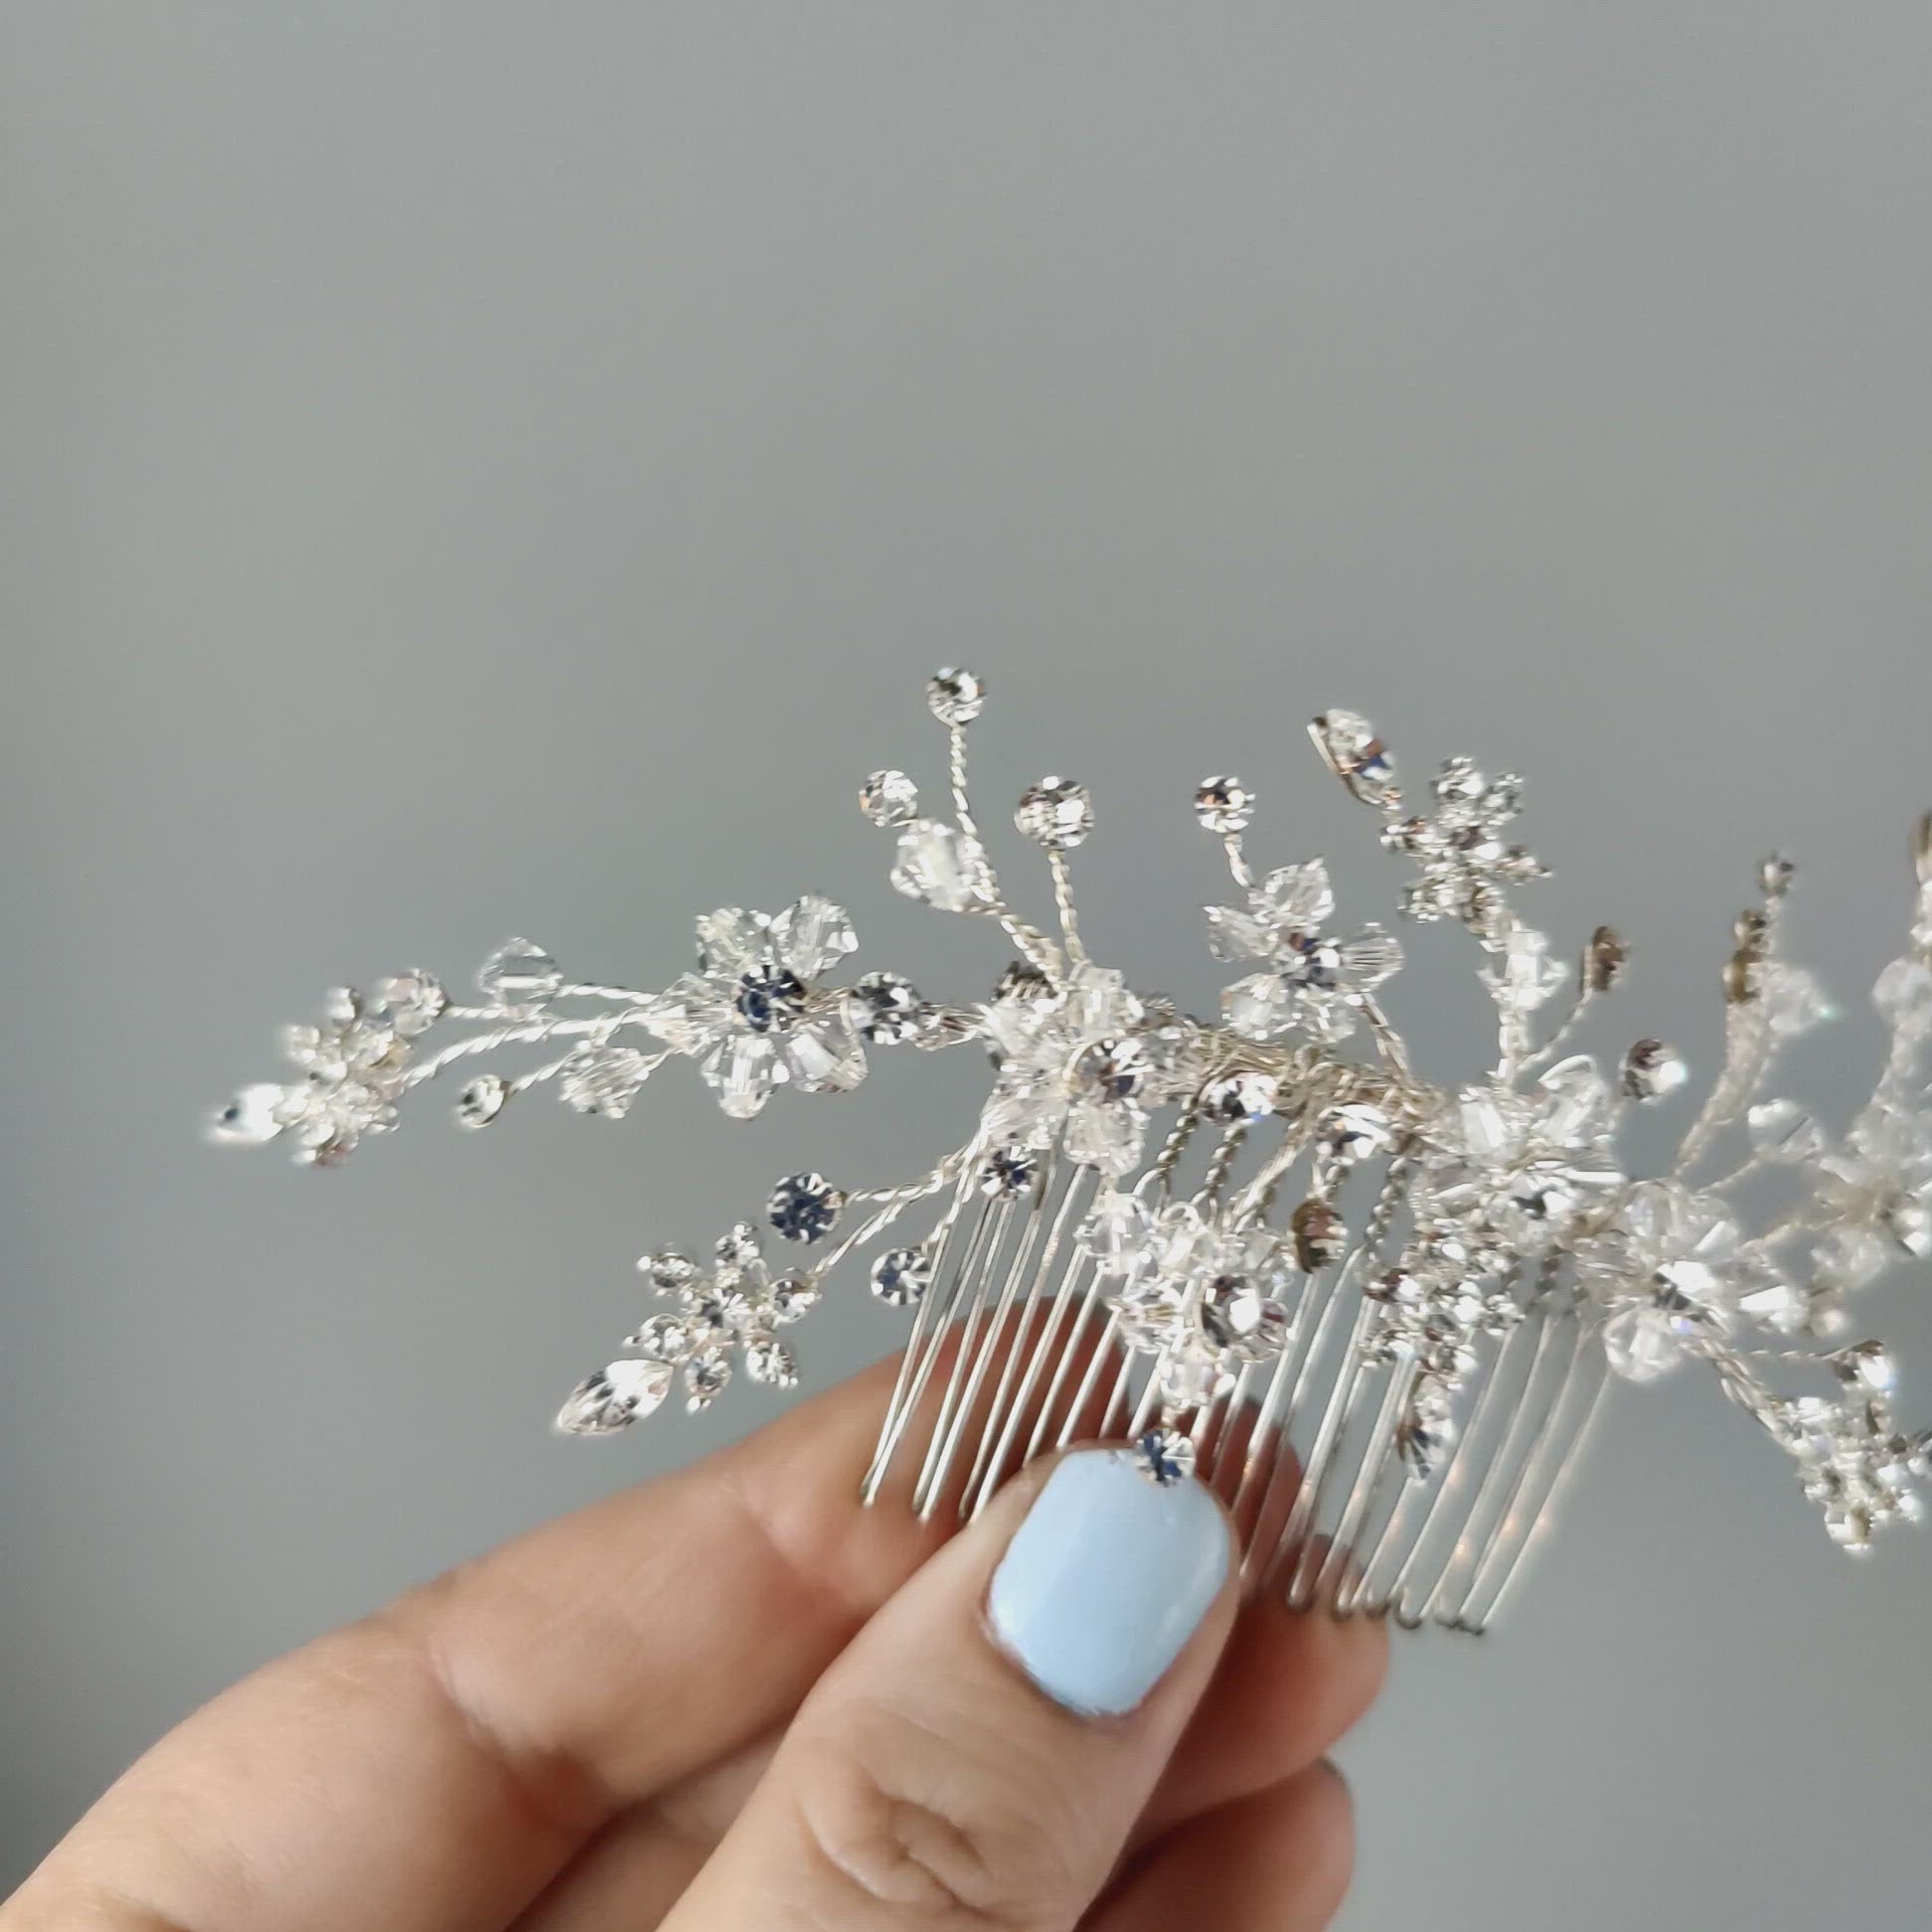 Delicate Crystal Bridal Hair Comb